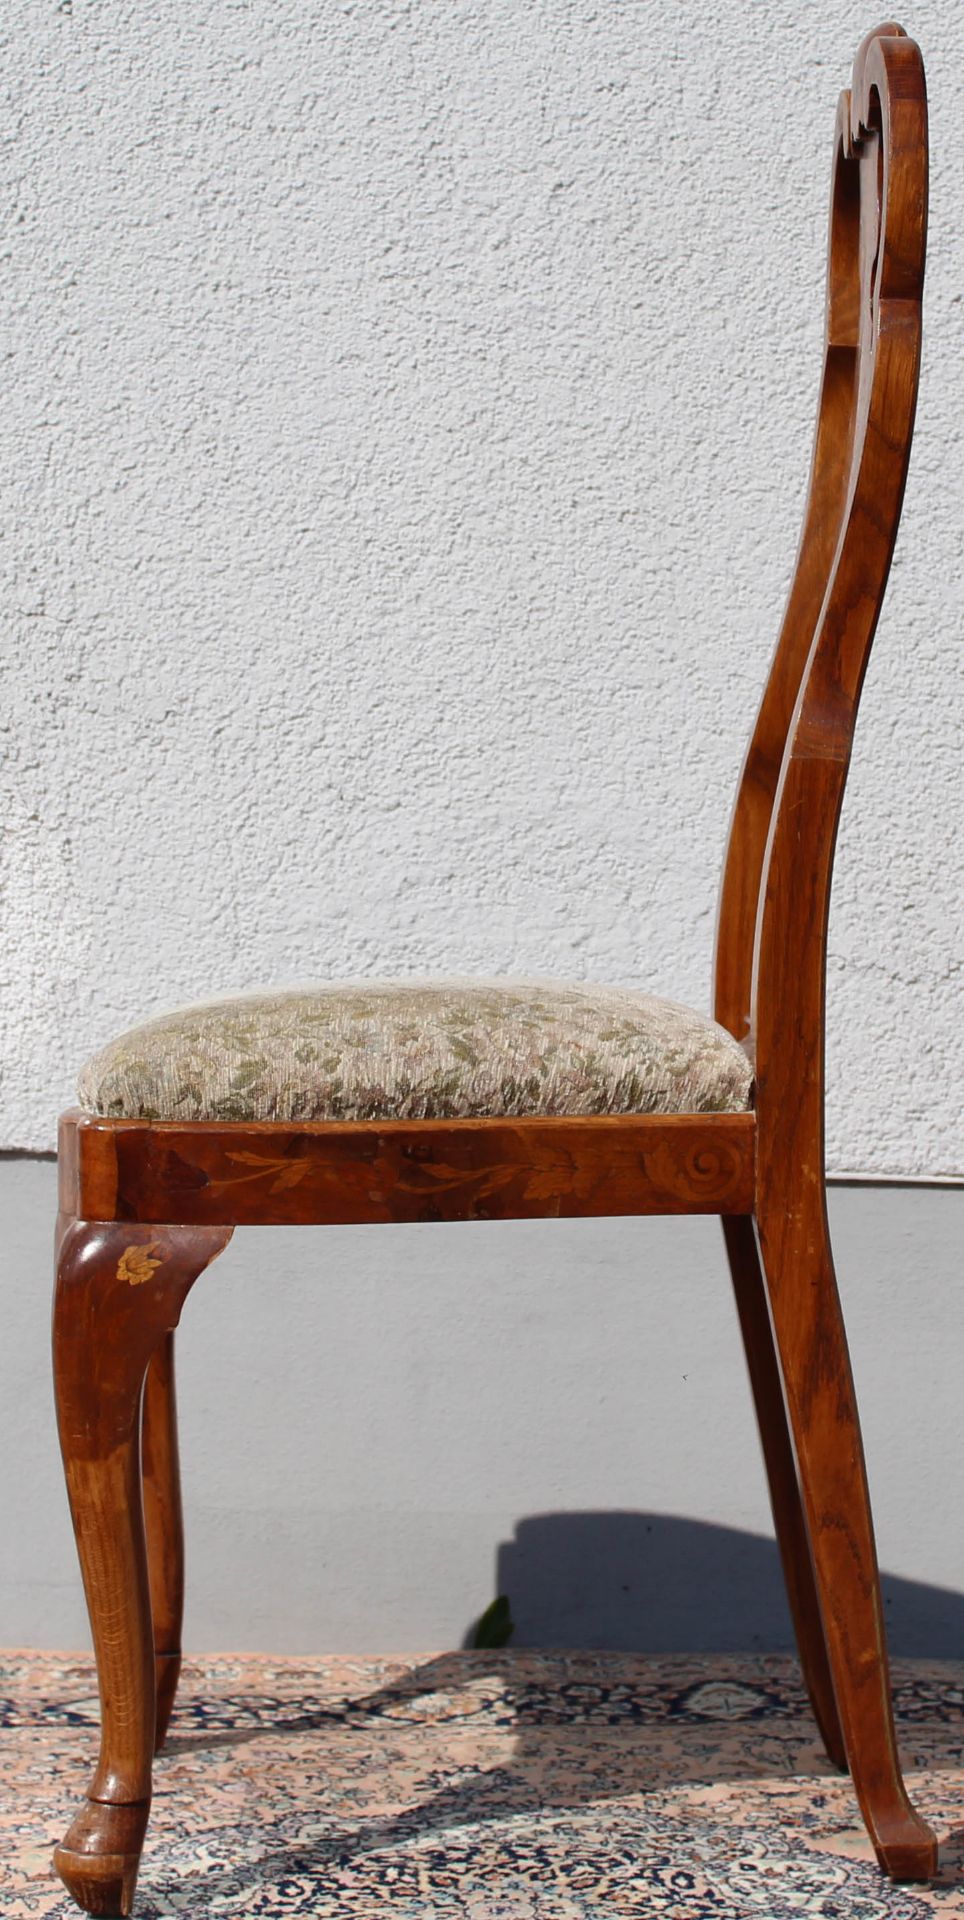 4 chairs. Ebonized. Holland style.108(49) cm x 49 cm x 43 cm.4 Stühle. Ebonisiert. Holland Stil. - Image 2 of 6